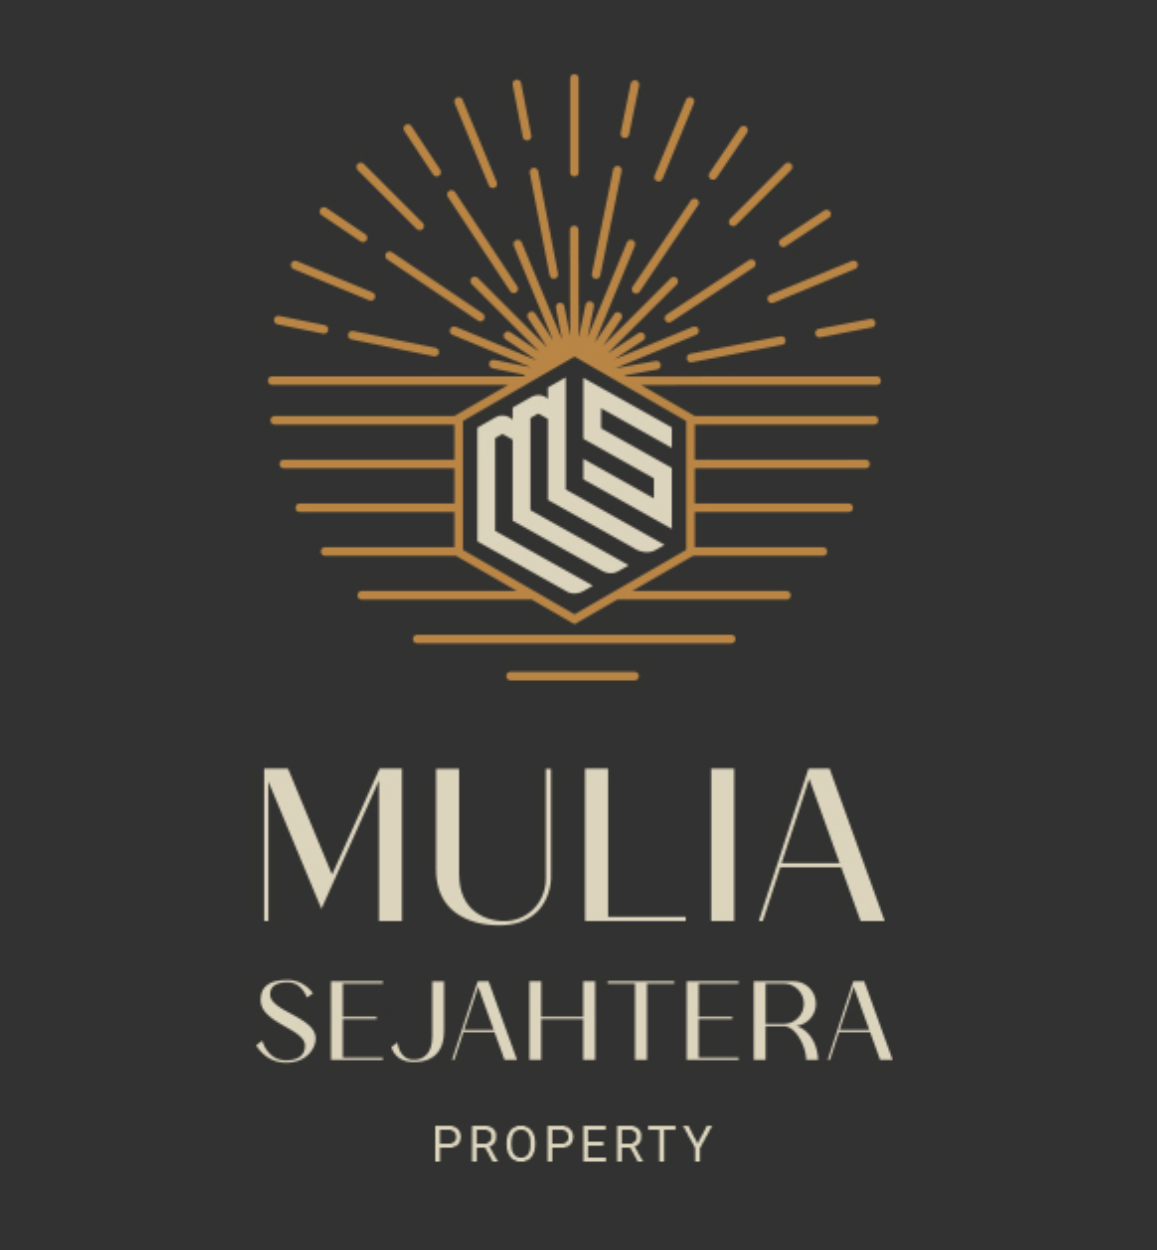 PT. Mulia Sejahtera Property